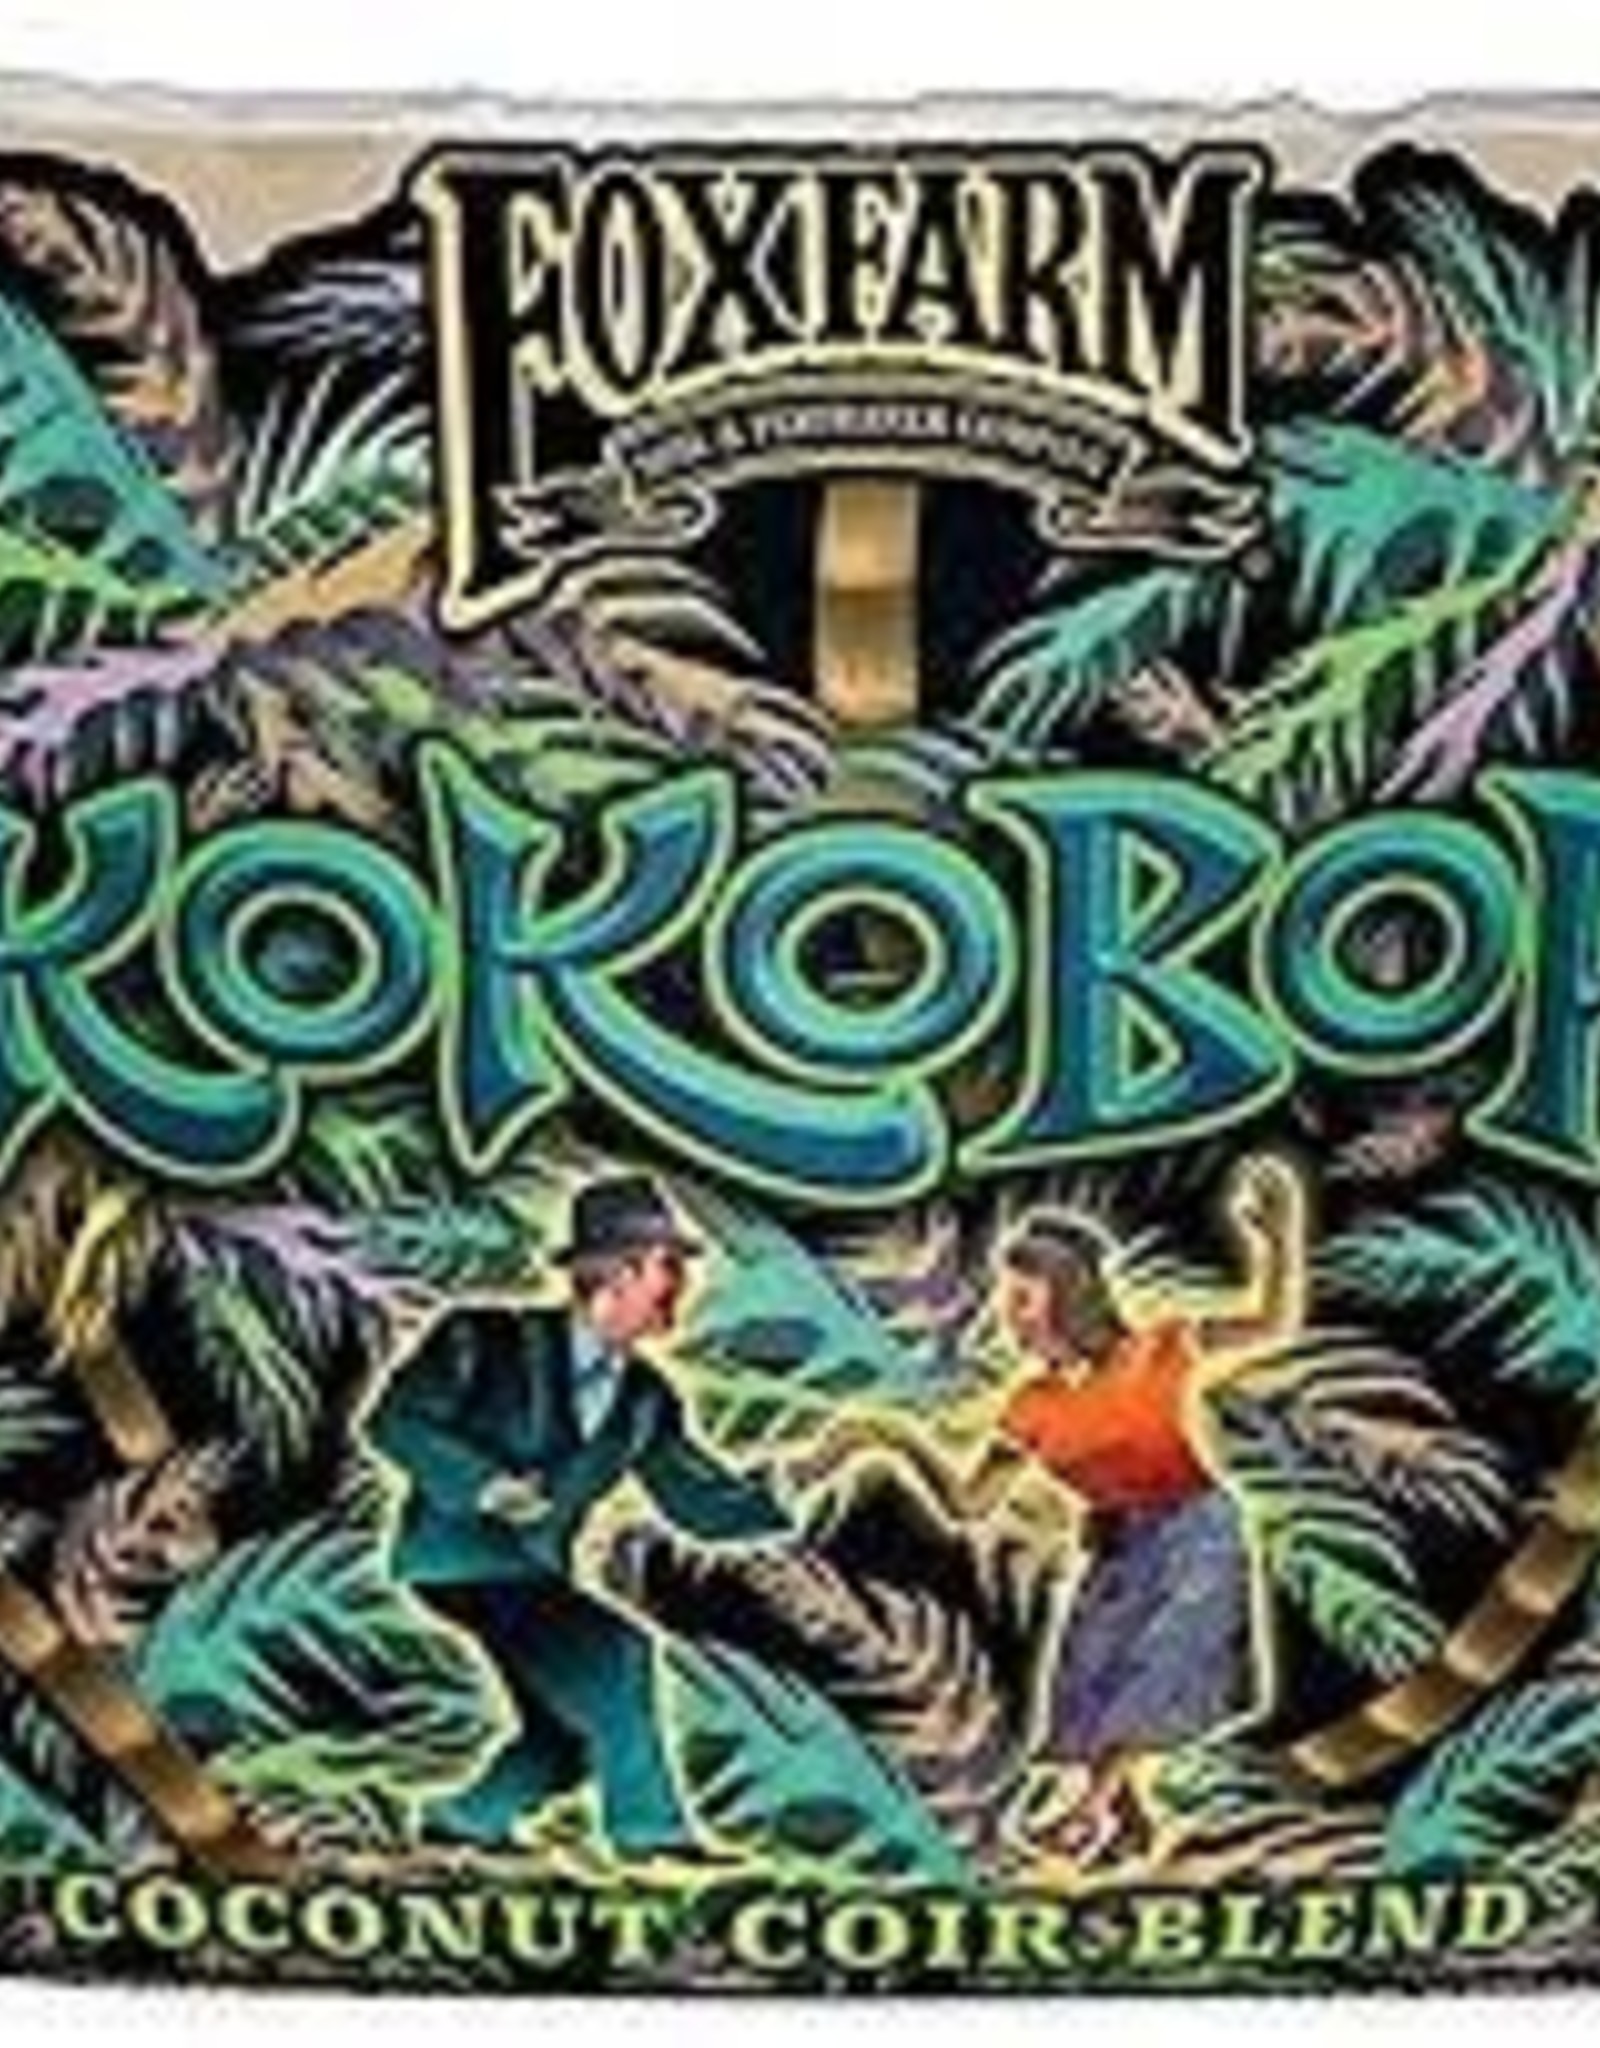 FoxFarm FoxFarm KoKo Bop Soil 3CF Bag